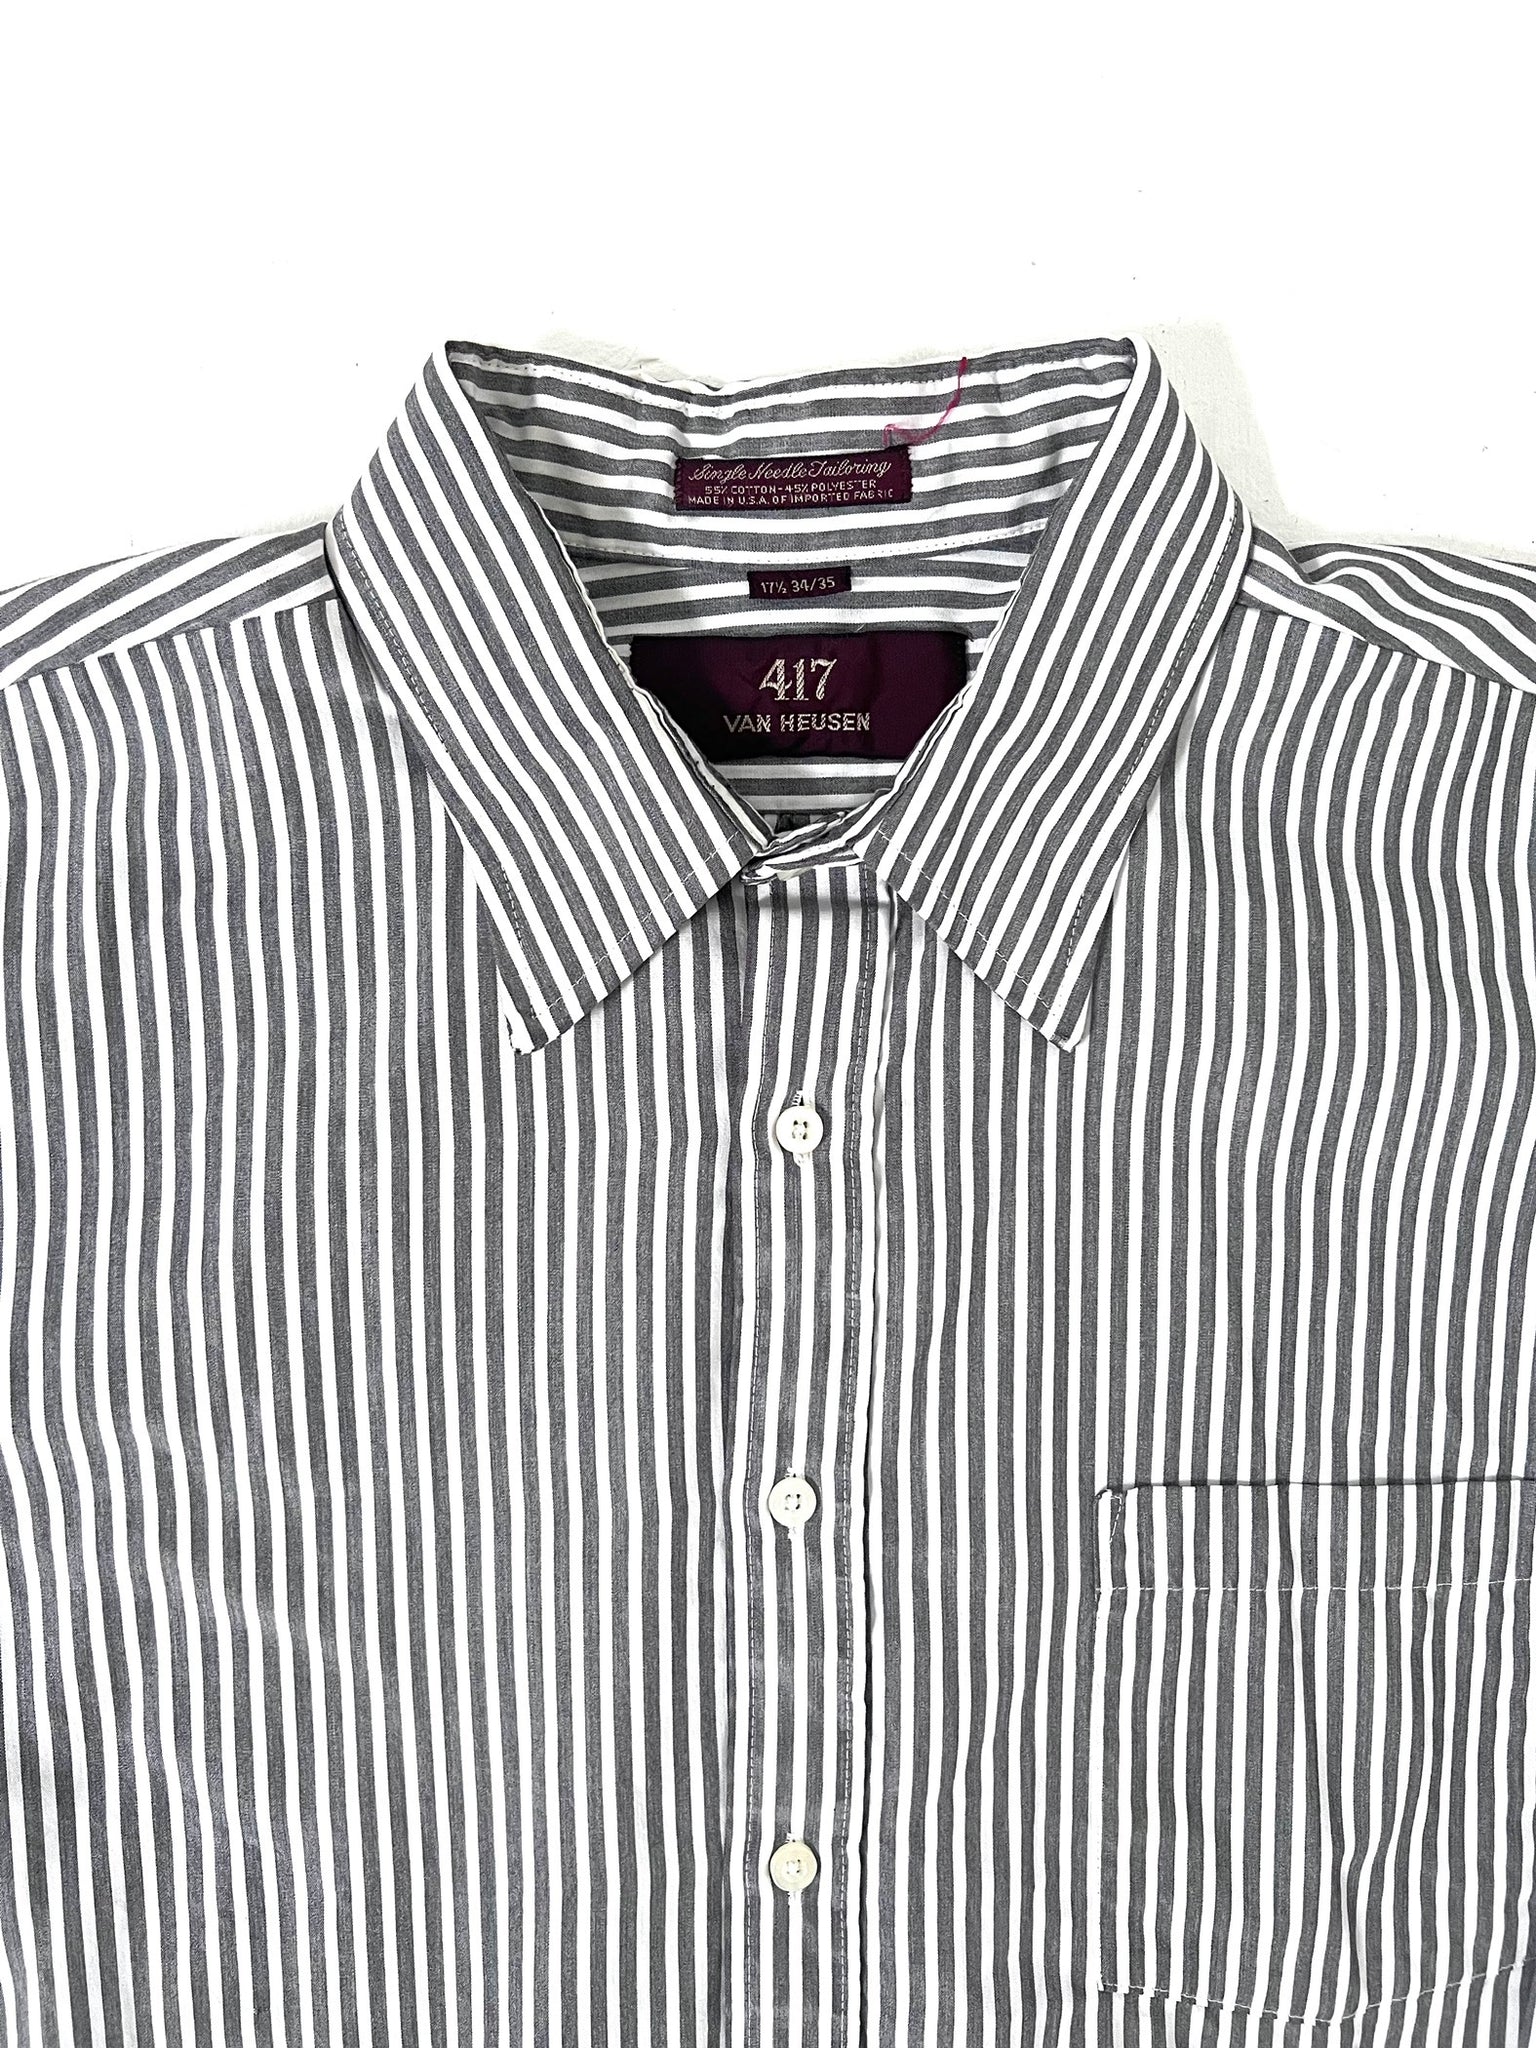 Black & White Striped Shirt